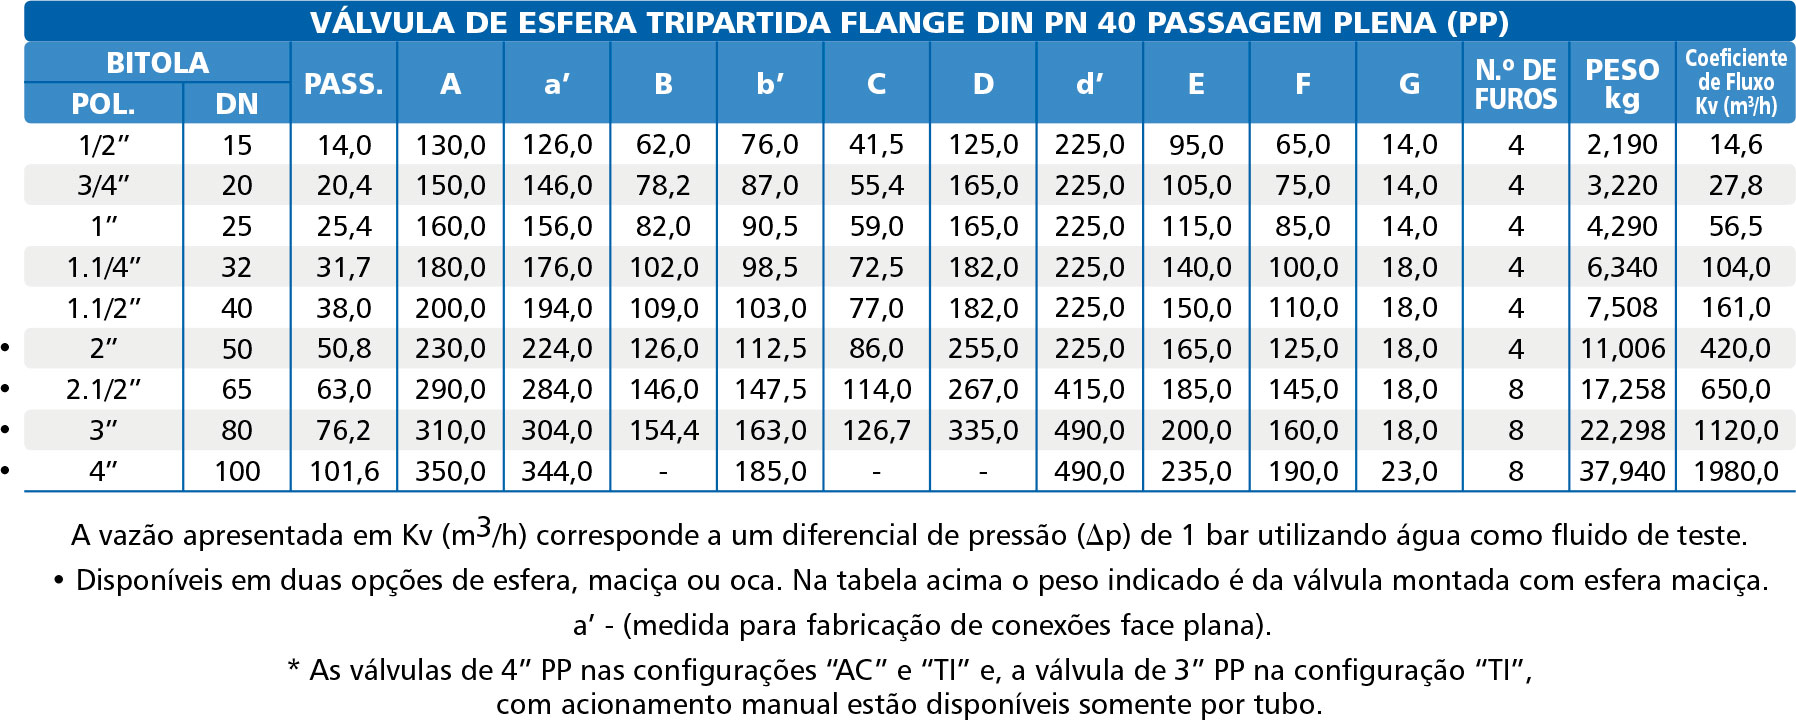 Valvula-de-Esfera-Tripartida-Serie-1000-Flange-DIN-PN40-tabela